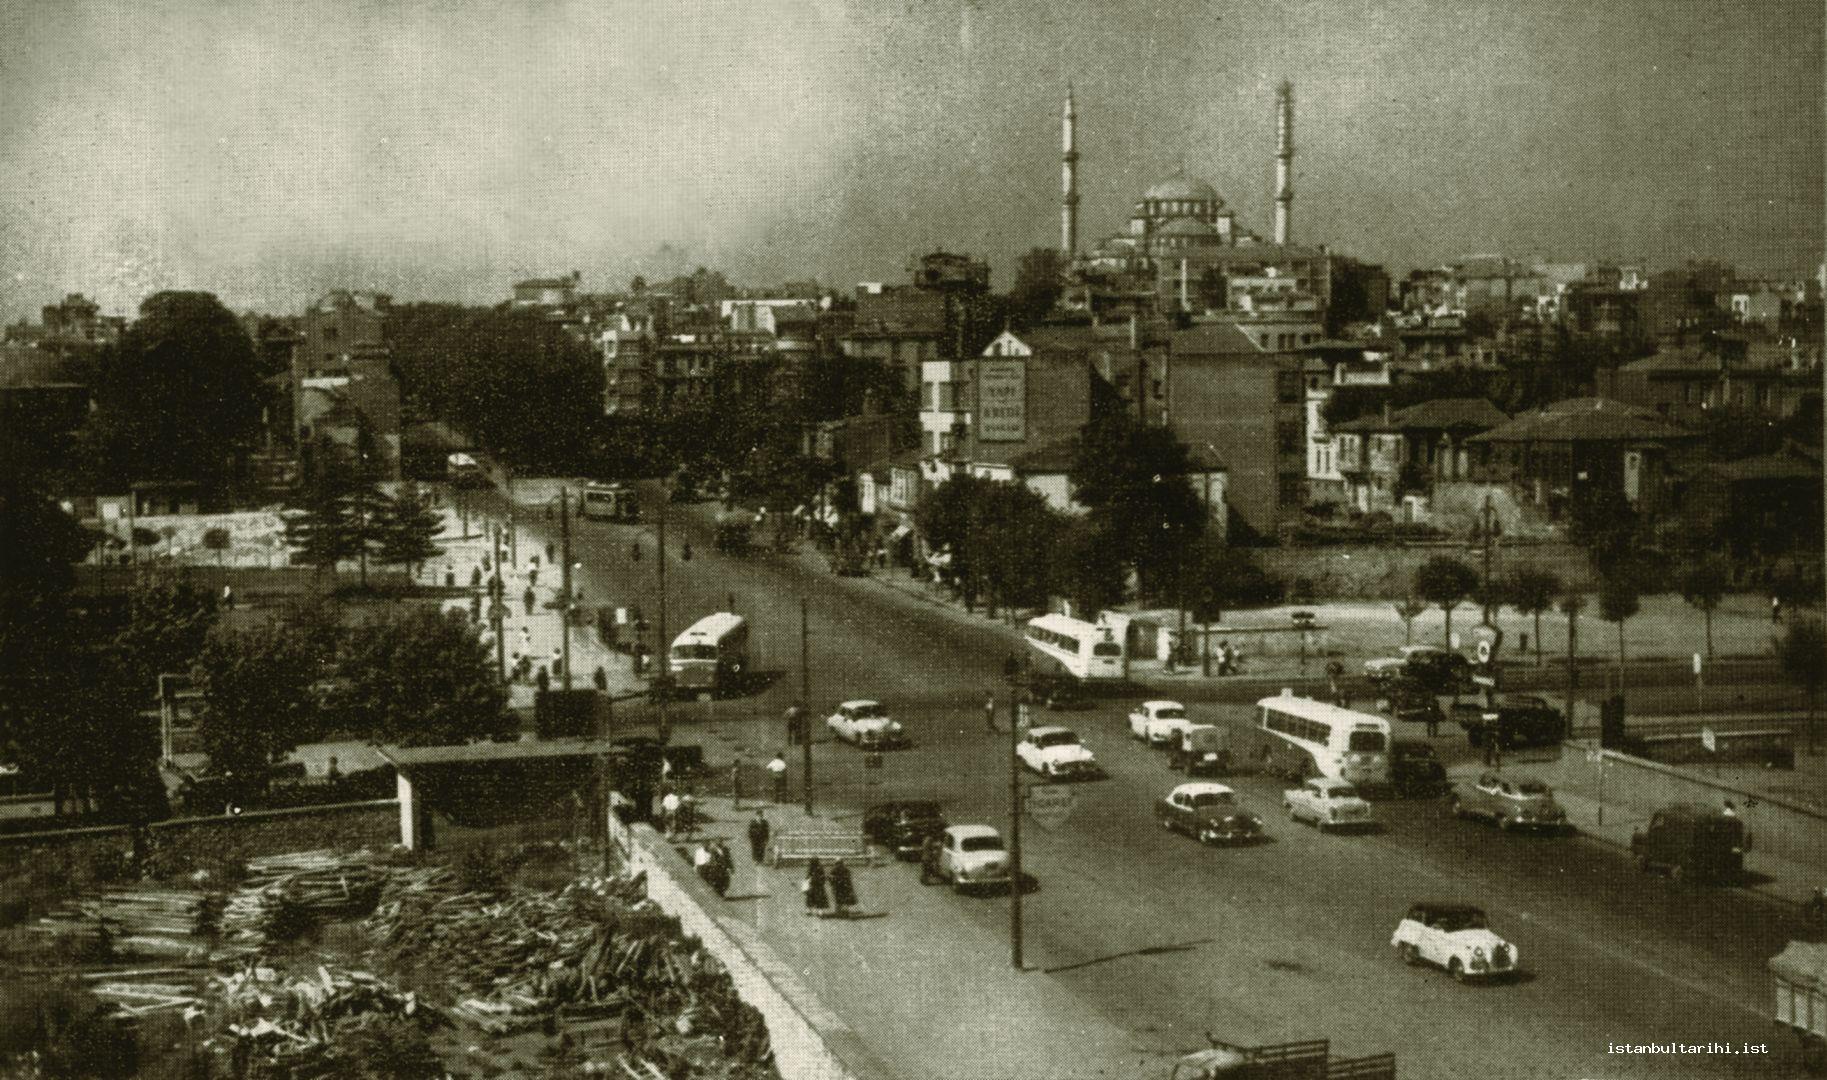 9- The view of Fatih from Şehzadebaşı (İstanbul’un Kitabı)